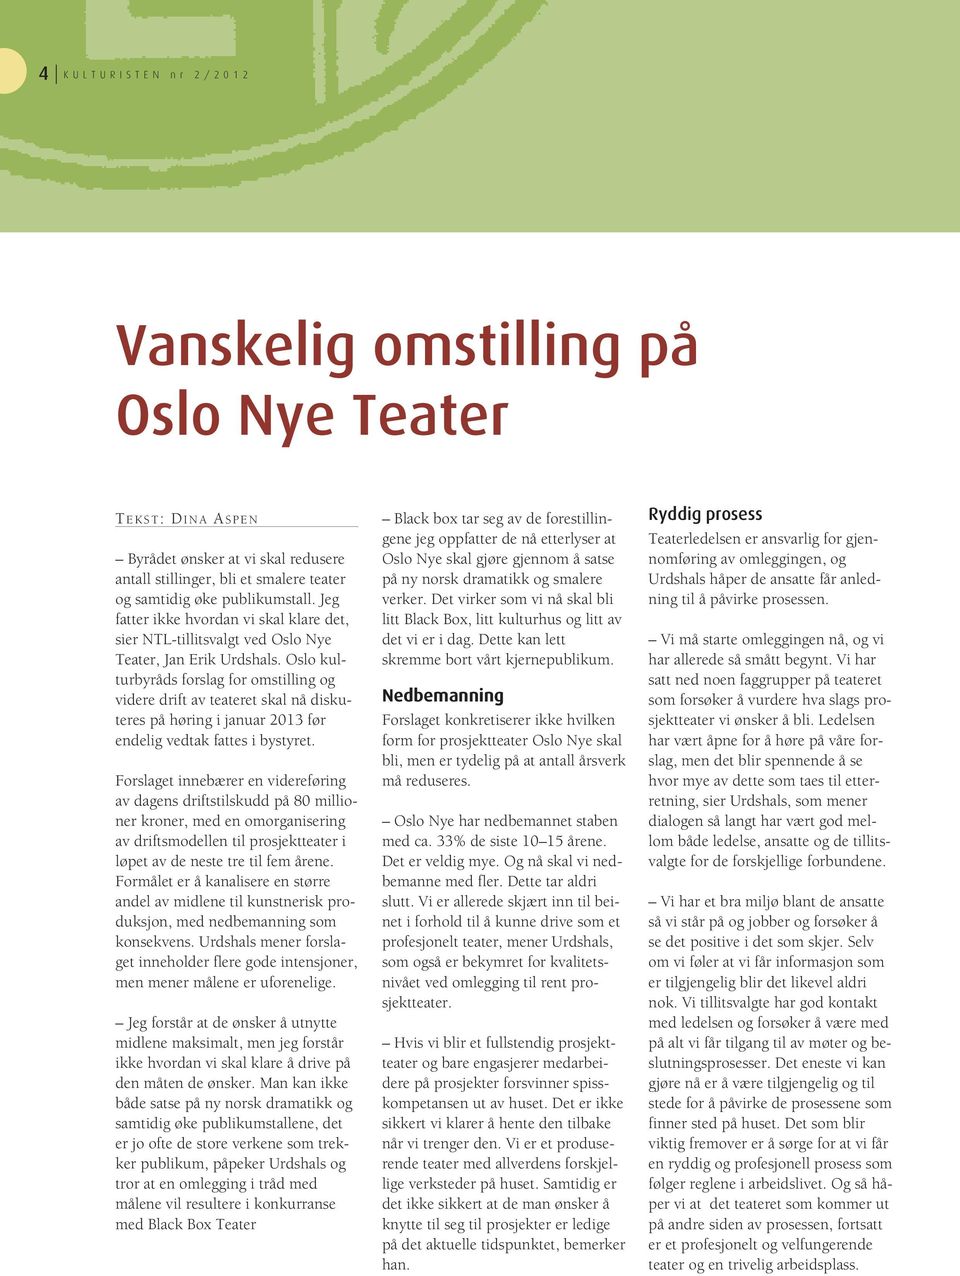 Oslo kulturbyråds forslag for omstilling og videre drift av teateret skal nå diskuteres på høring i januar 2013 før endelig vedtak fattes i bystyret.